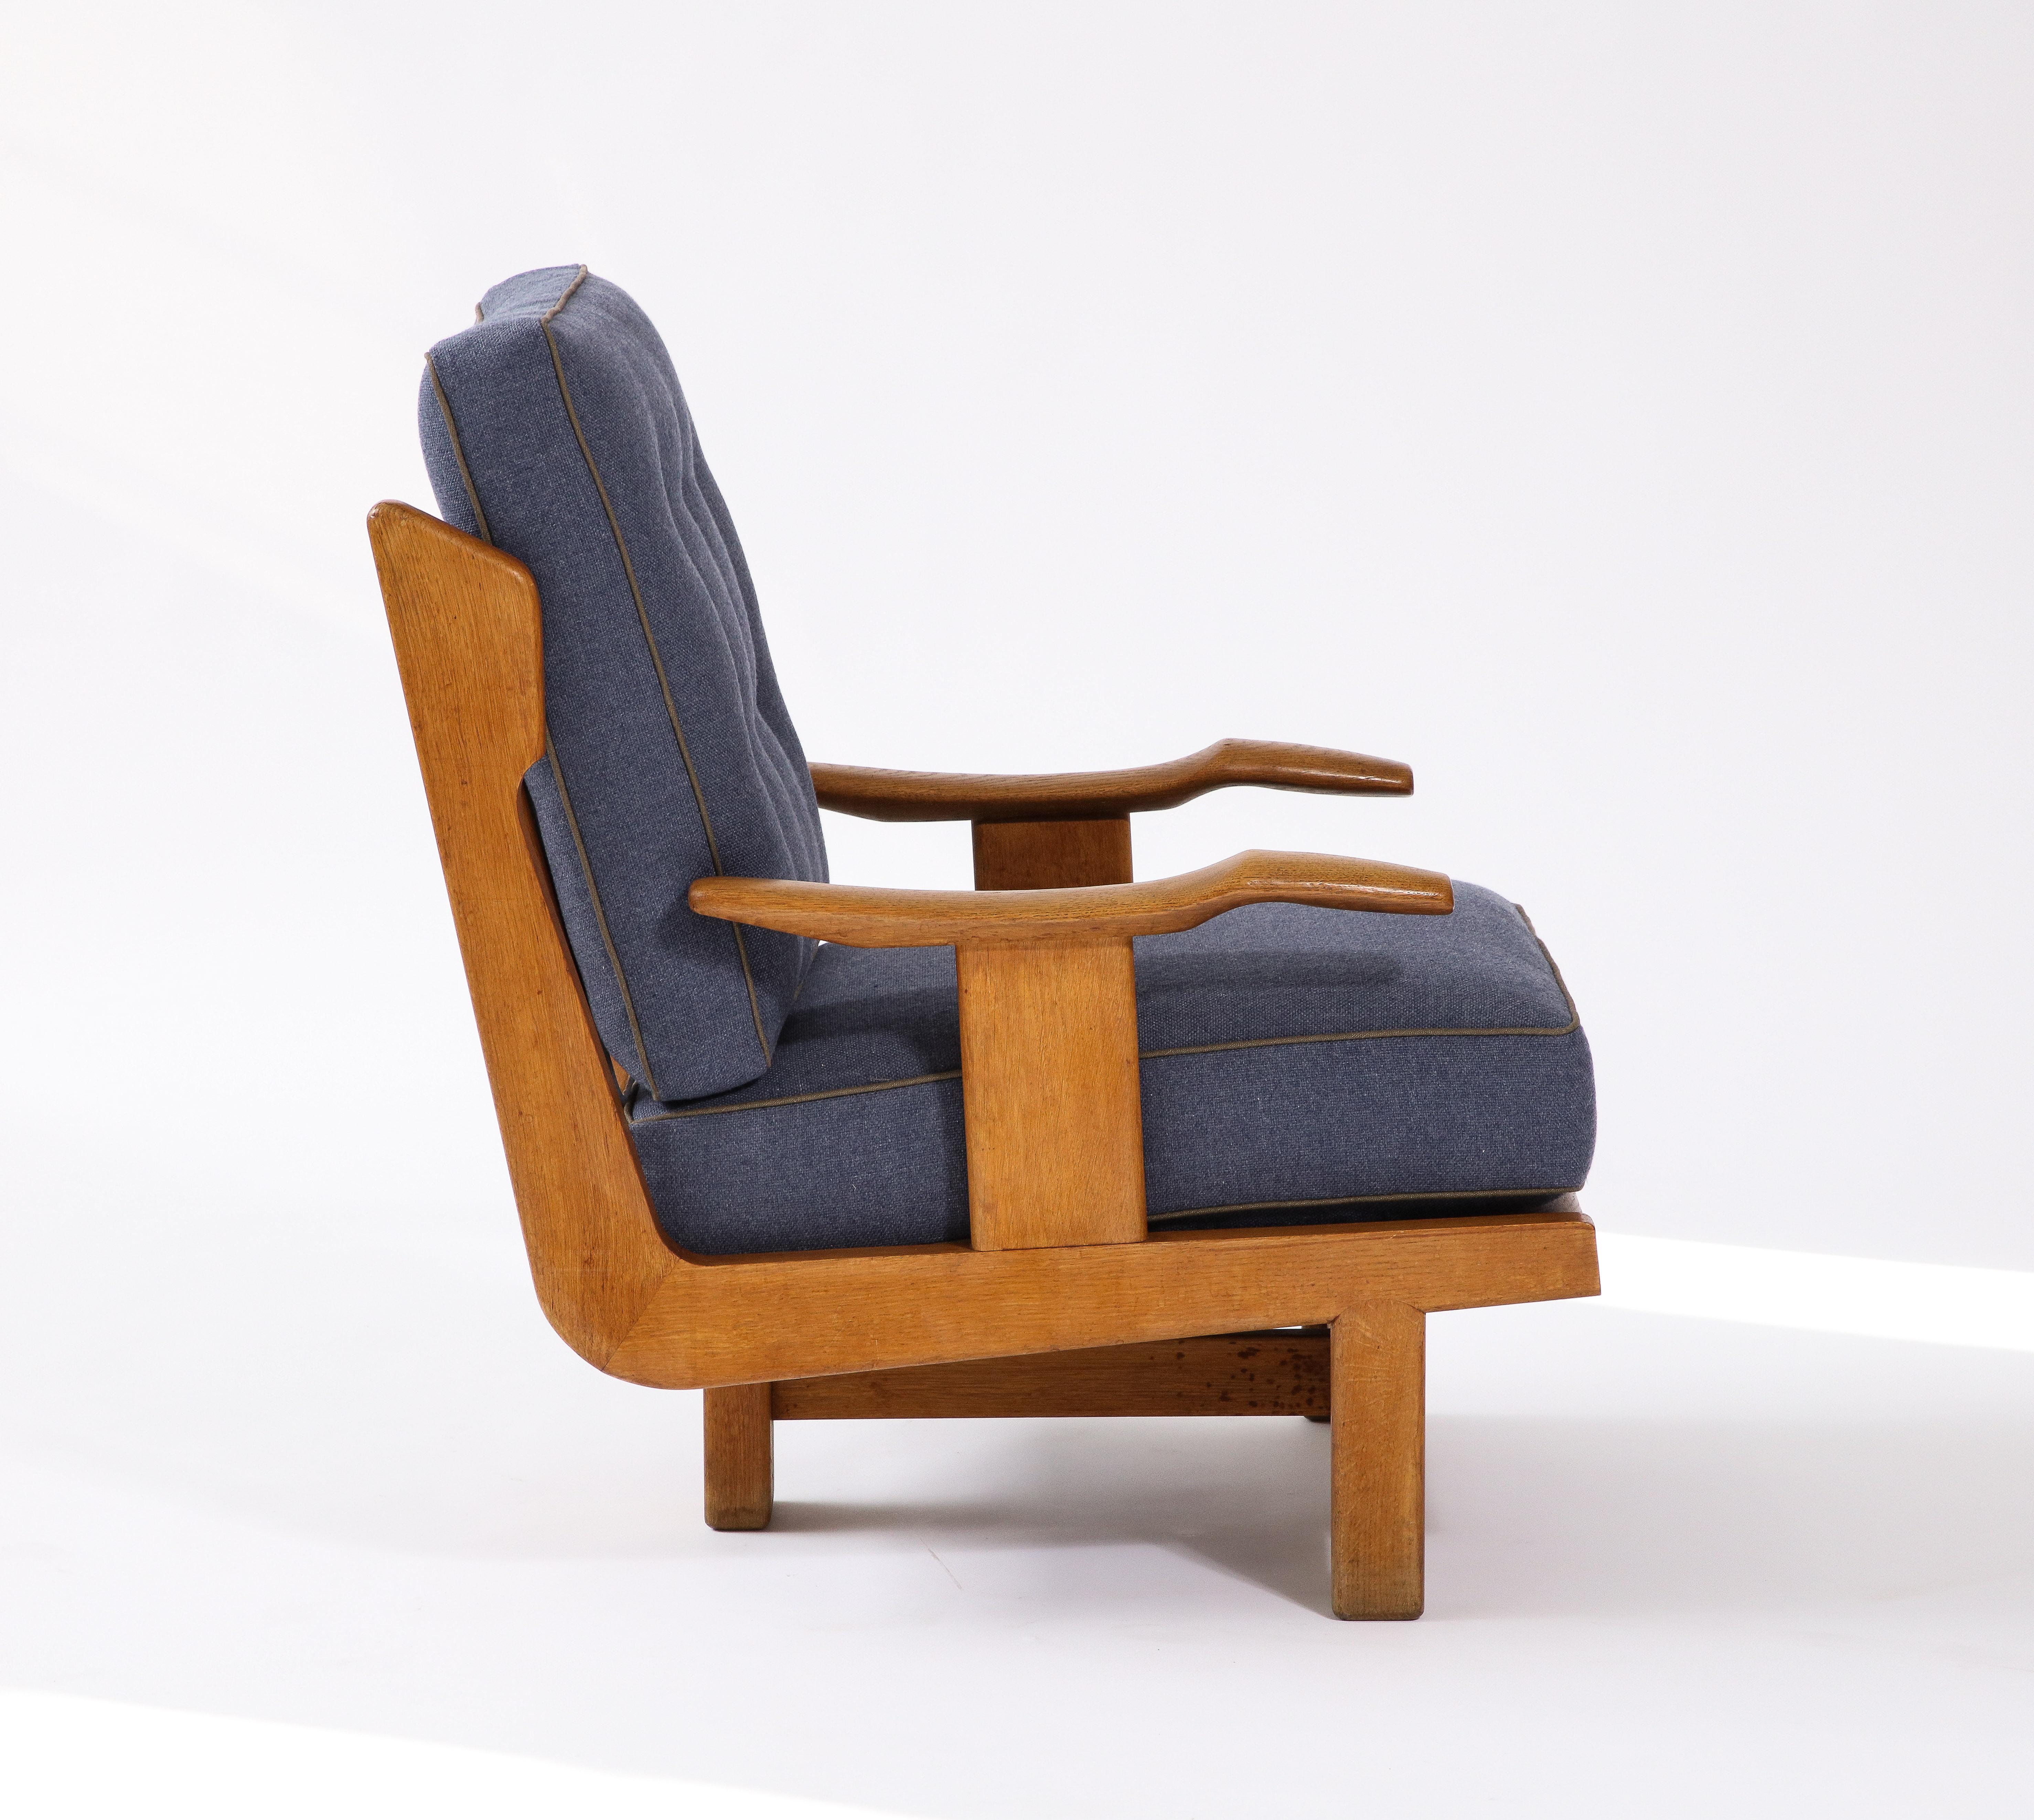 Lin Rare fauteuil tripode de Guillerme et Chambron, France, vers 1960 en vente